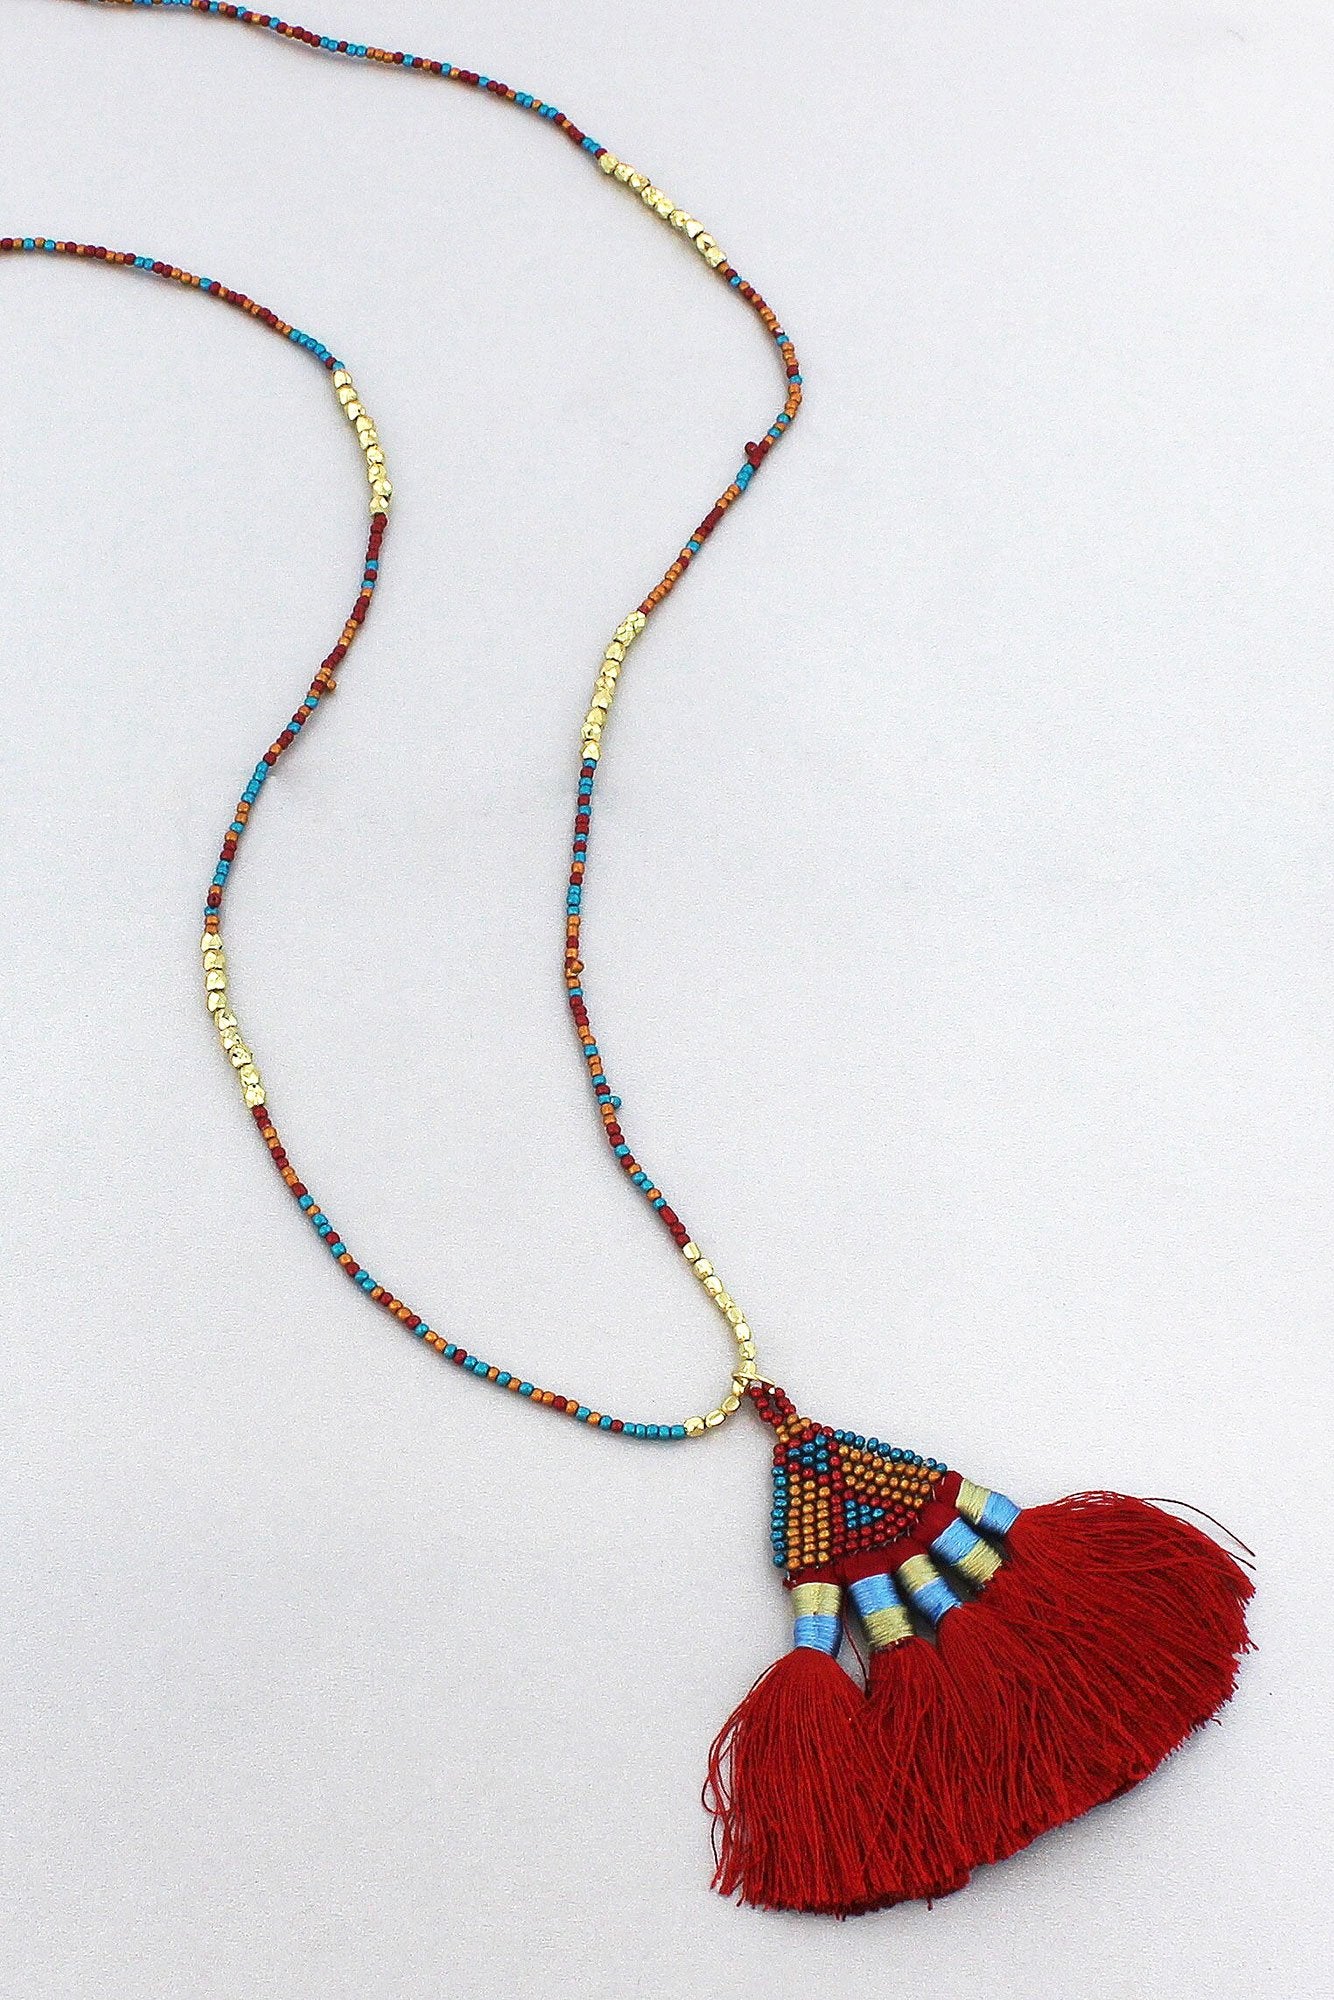 Fan Tassel Necklaces - The Desert Paintbrush